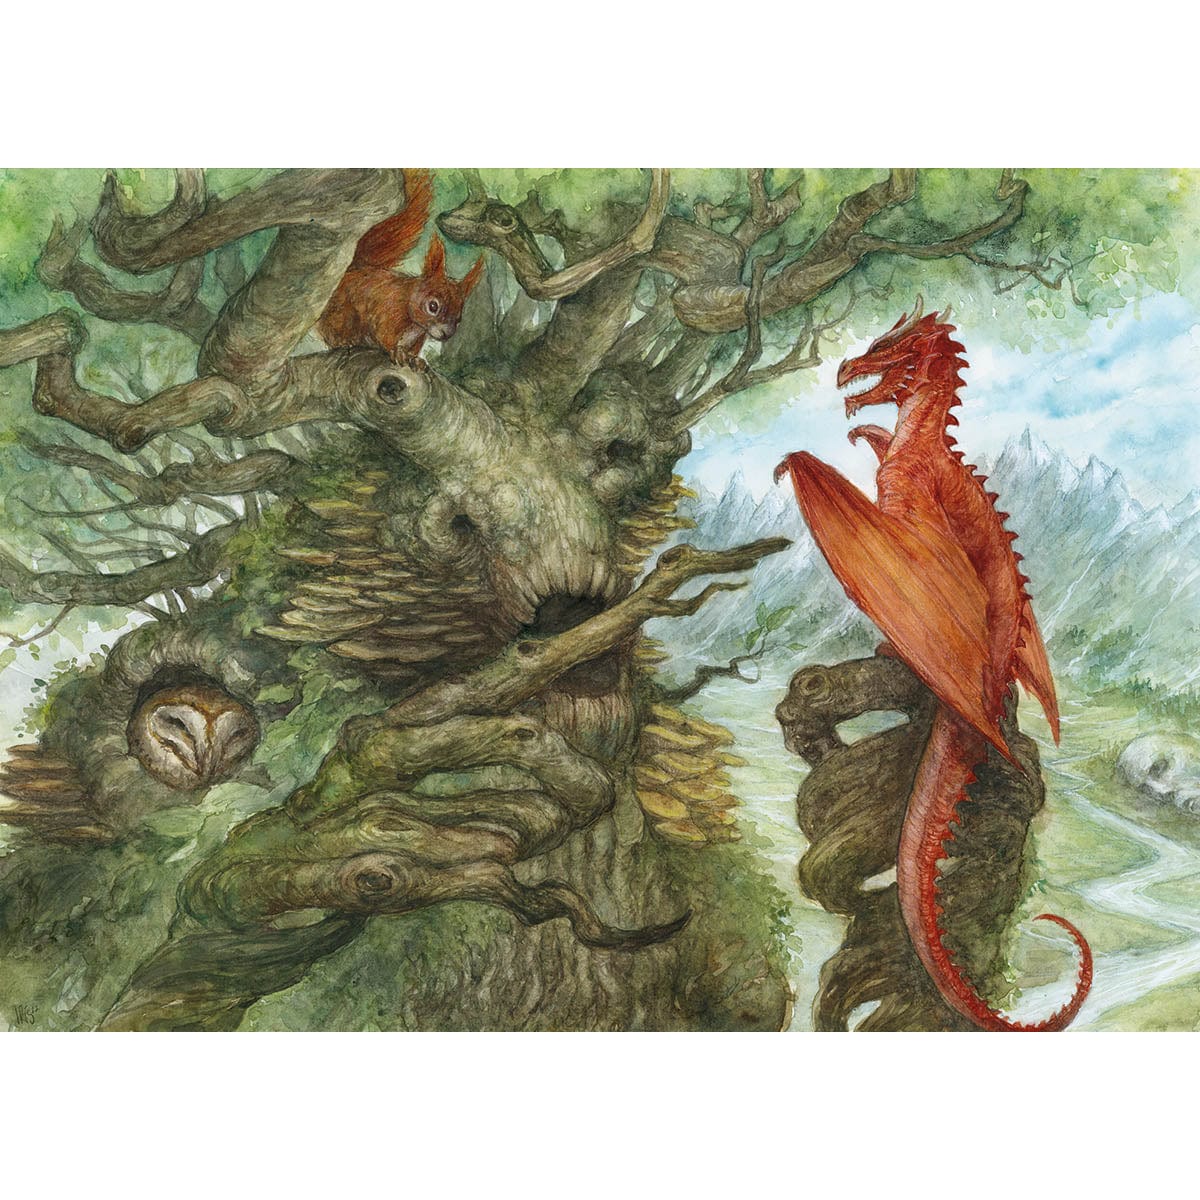 Wandering Treefolk Print